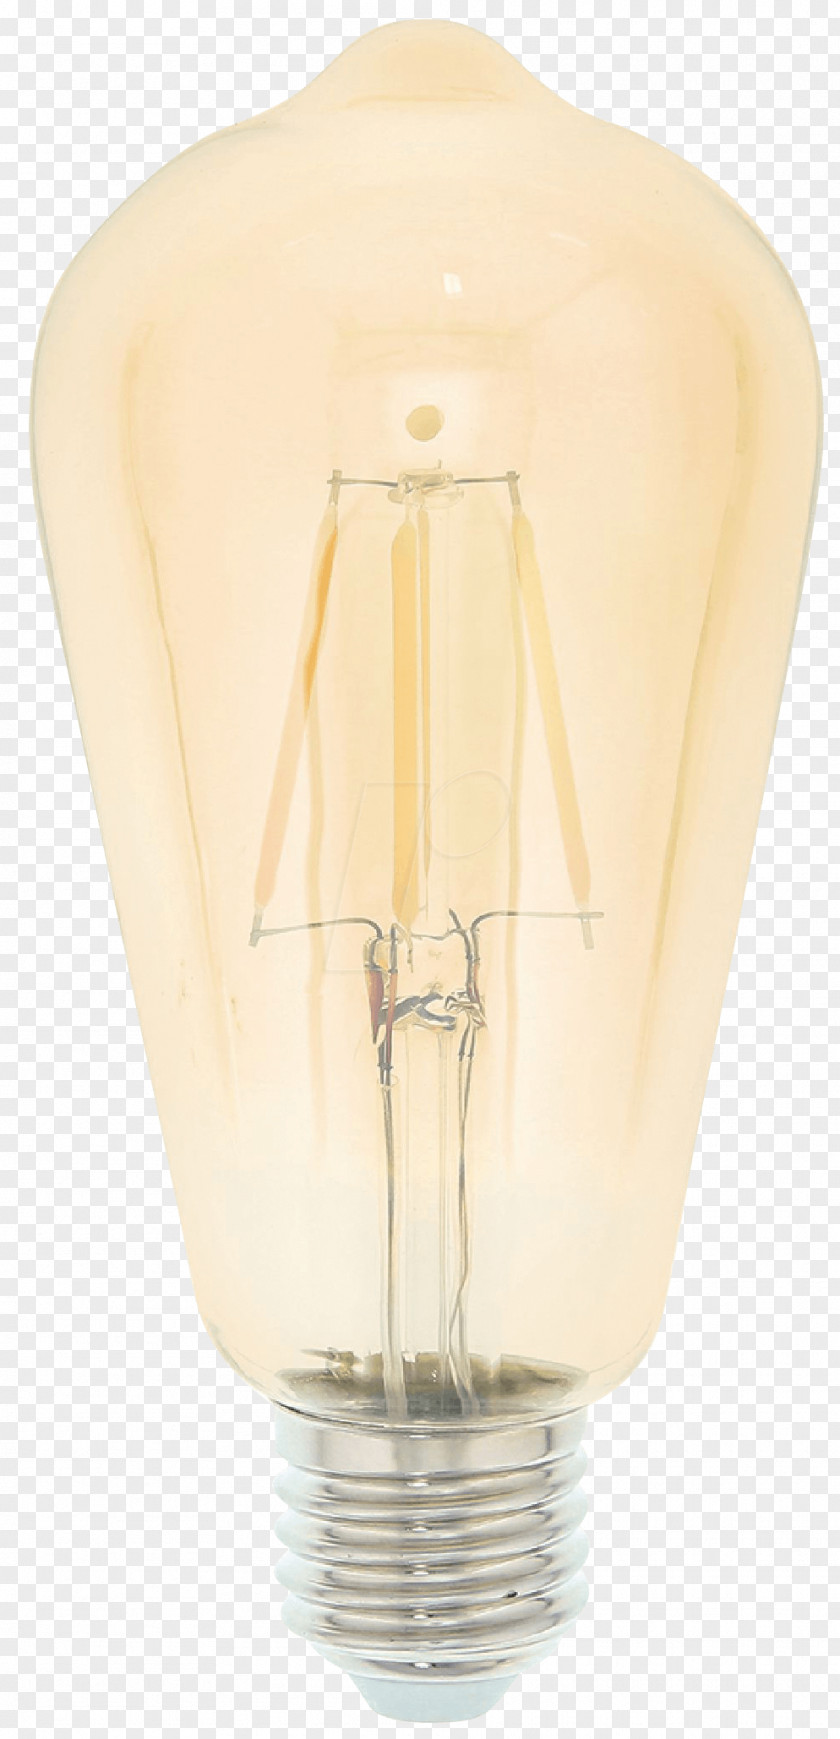 Led Lamp Incandescent Light Bulb LED Filament Lighting PNG